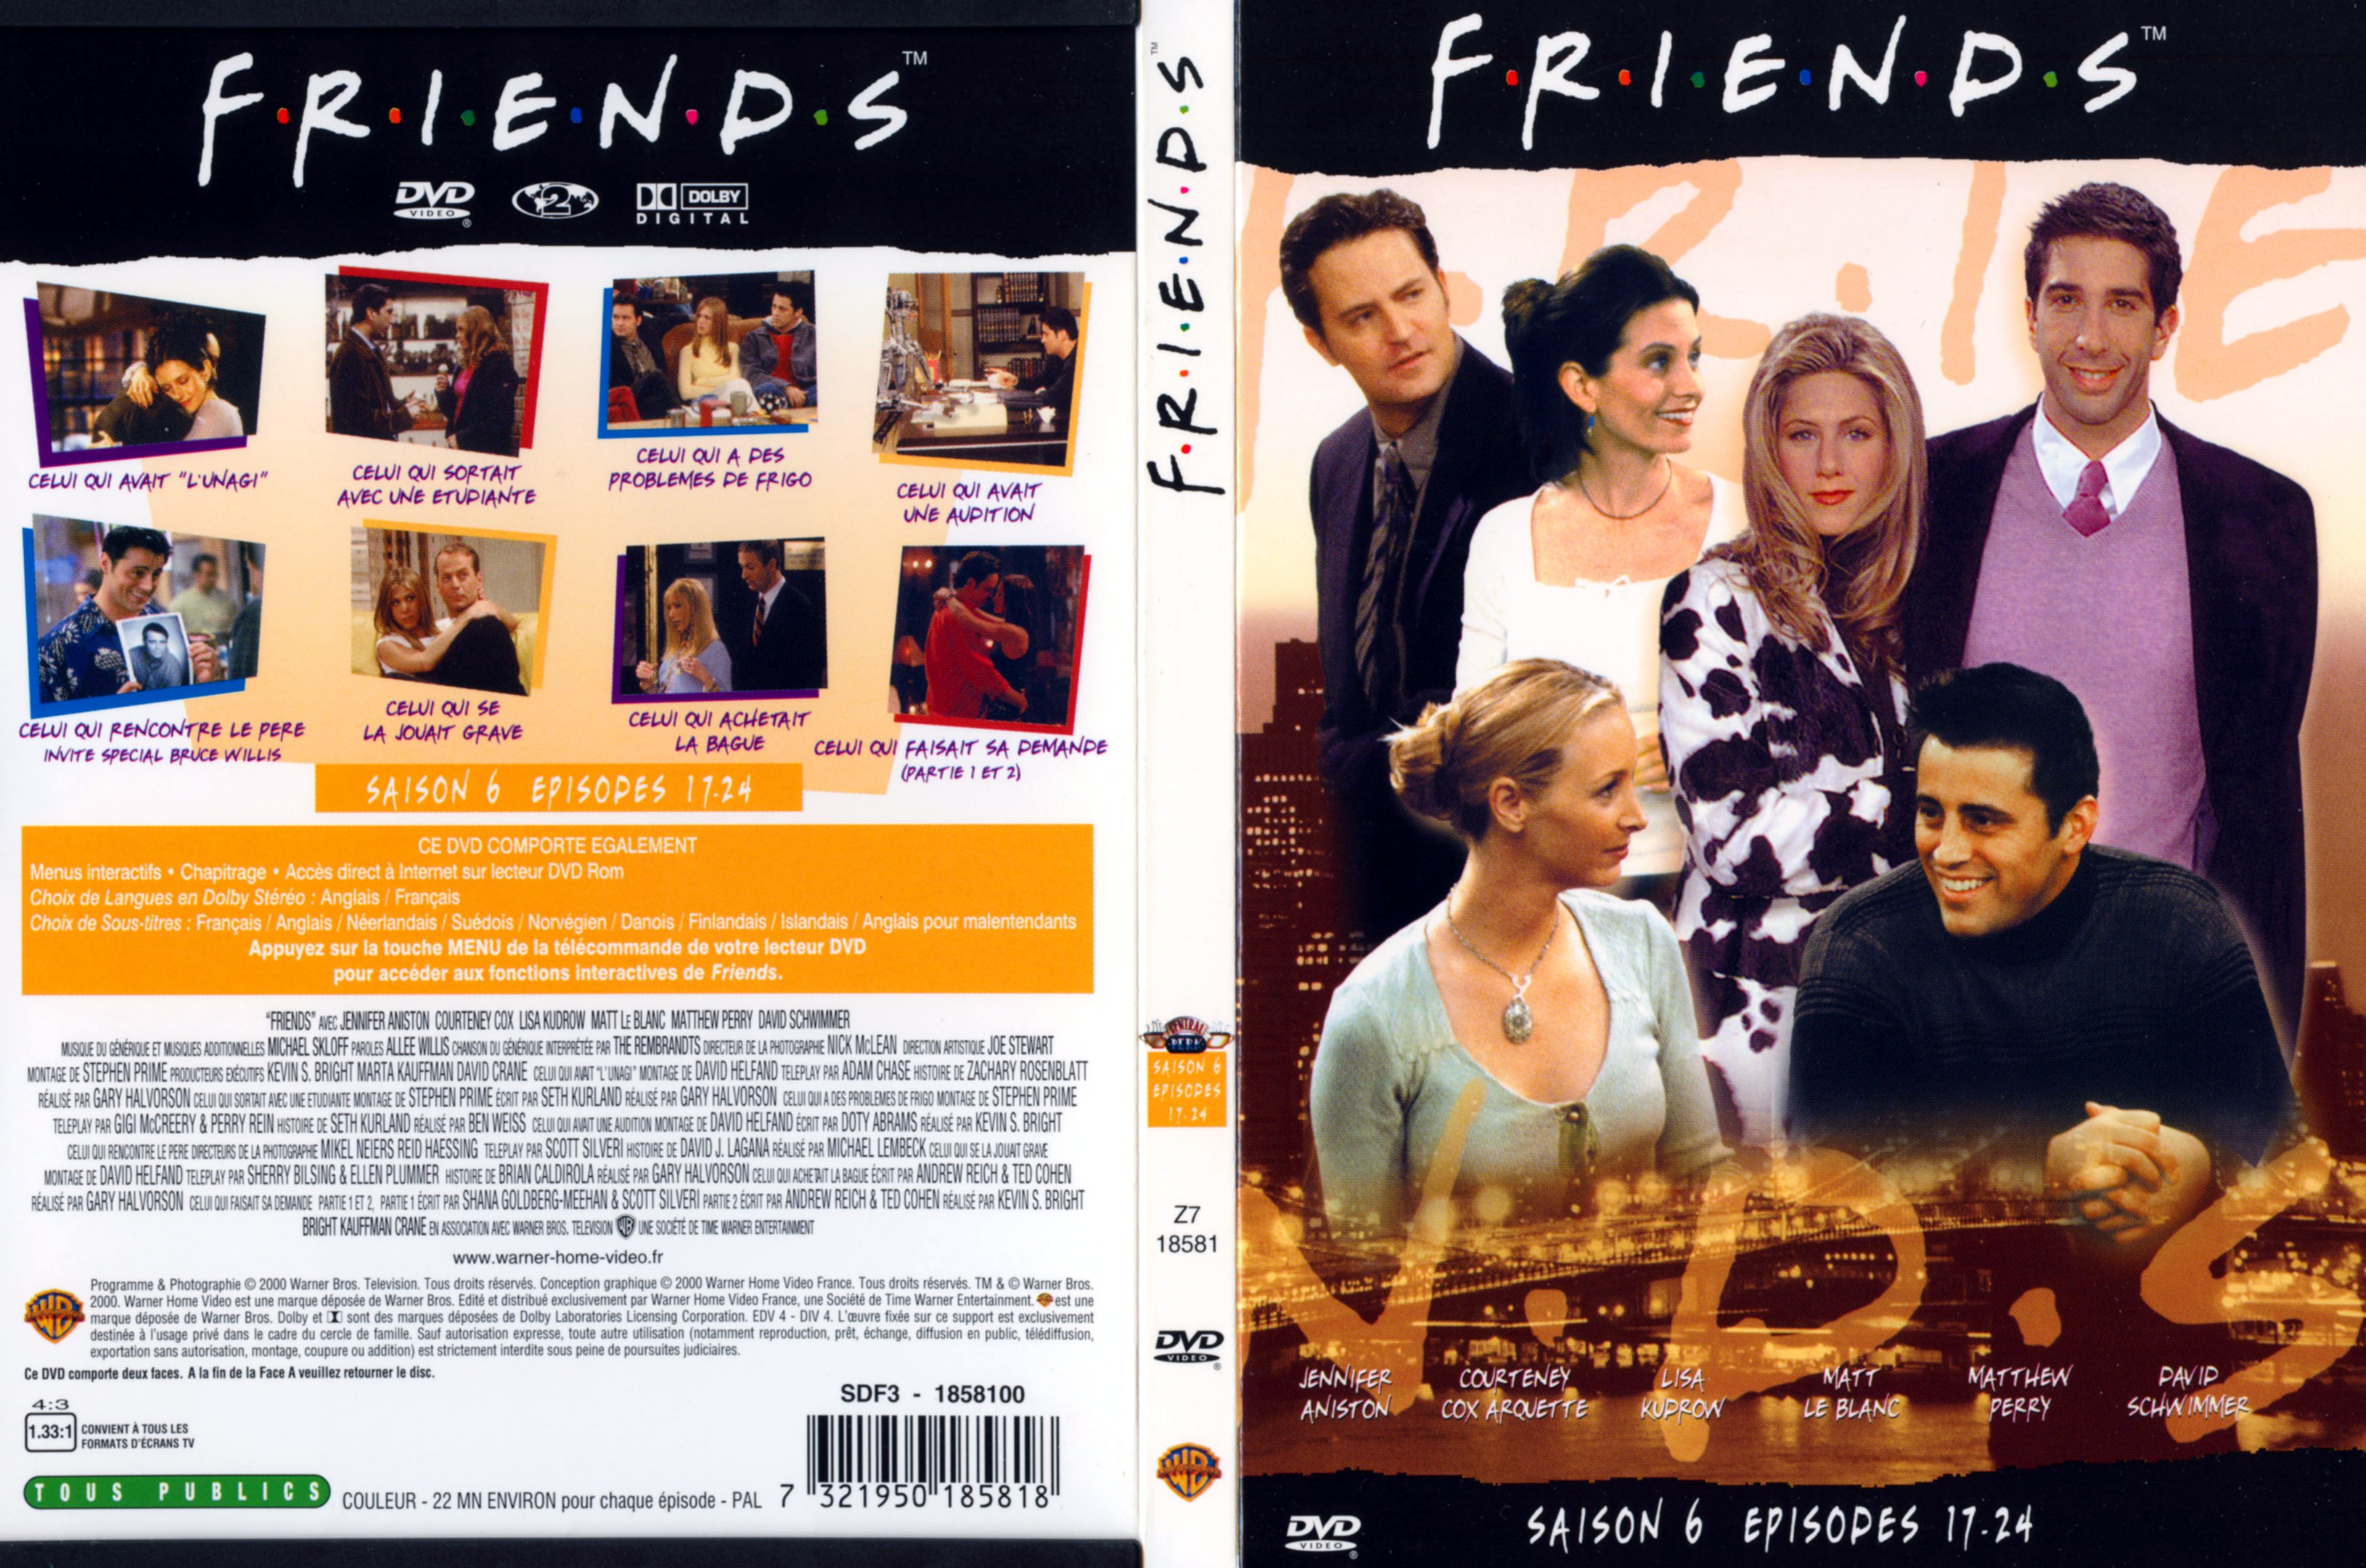 Jaquette DVD Friends saison 6 dvd 3